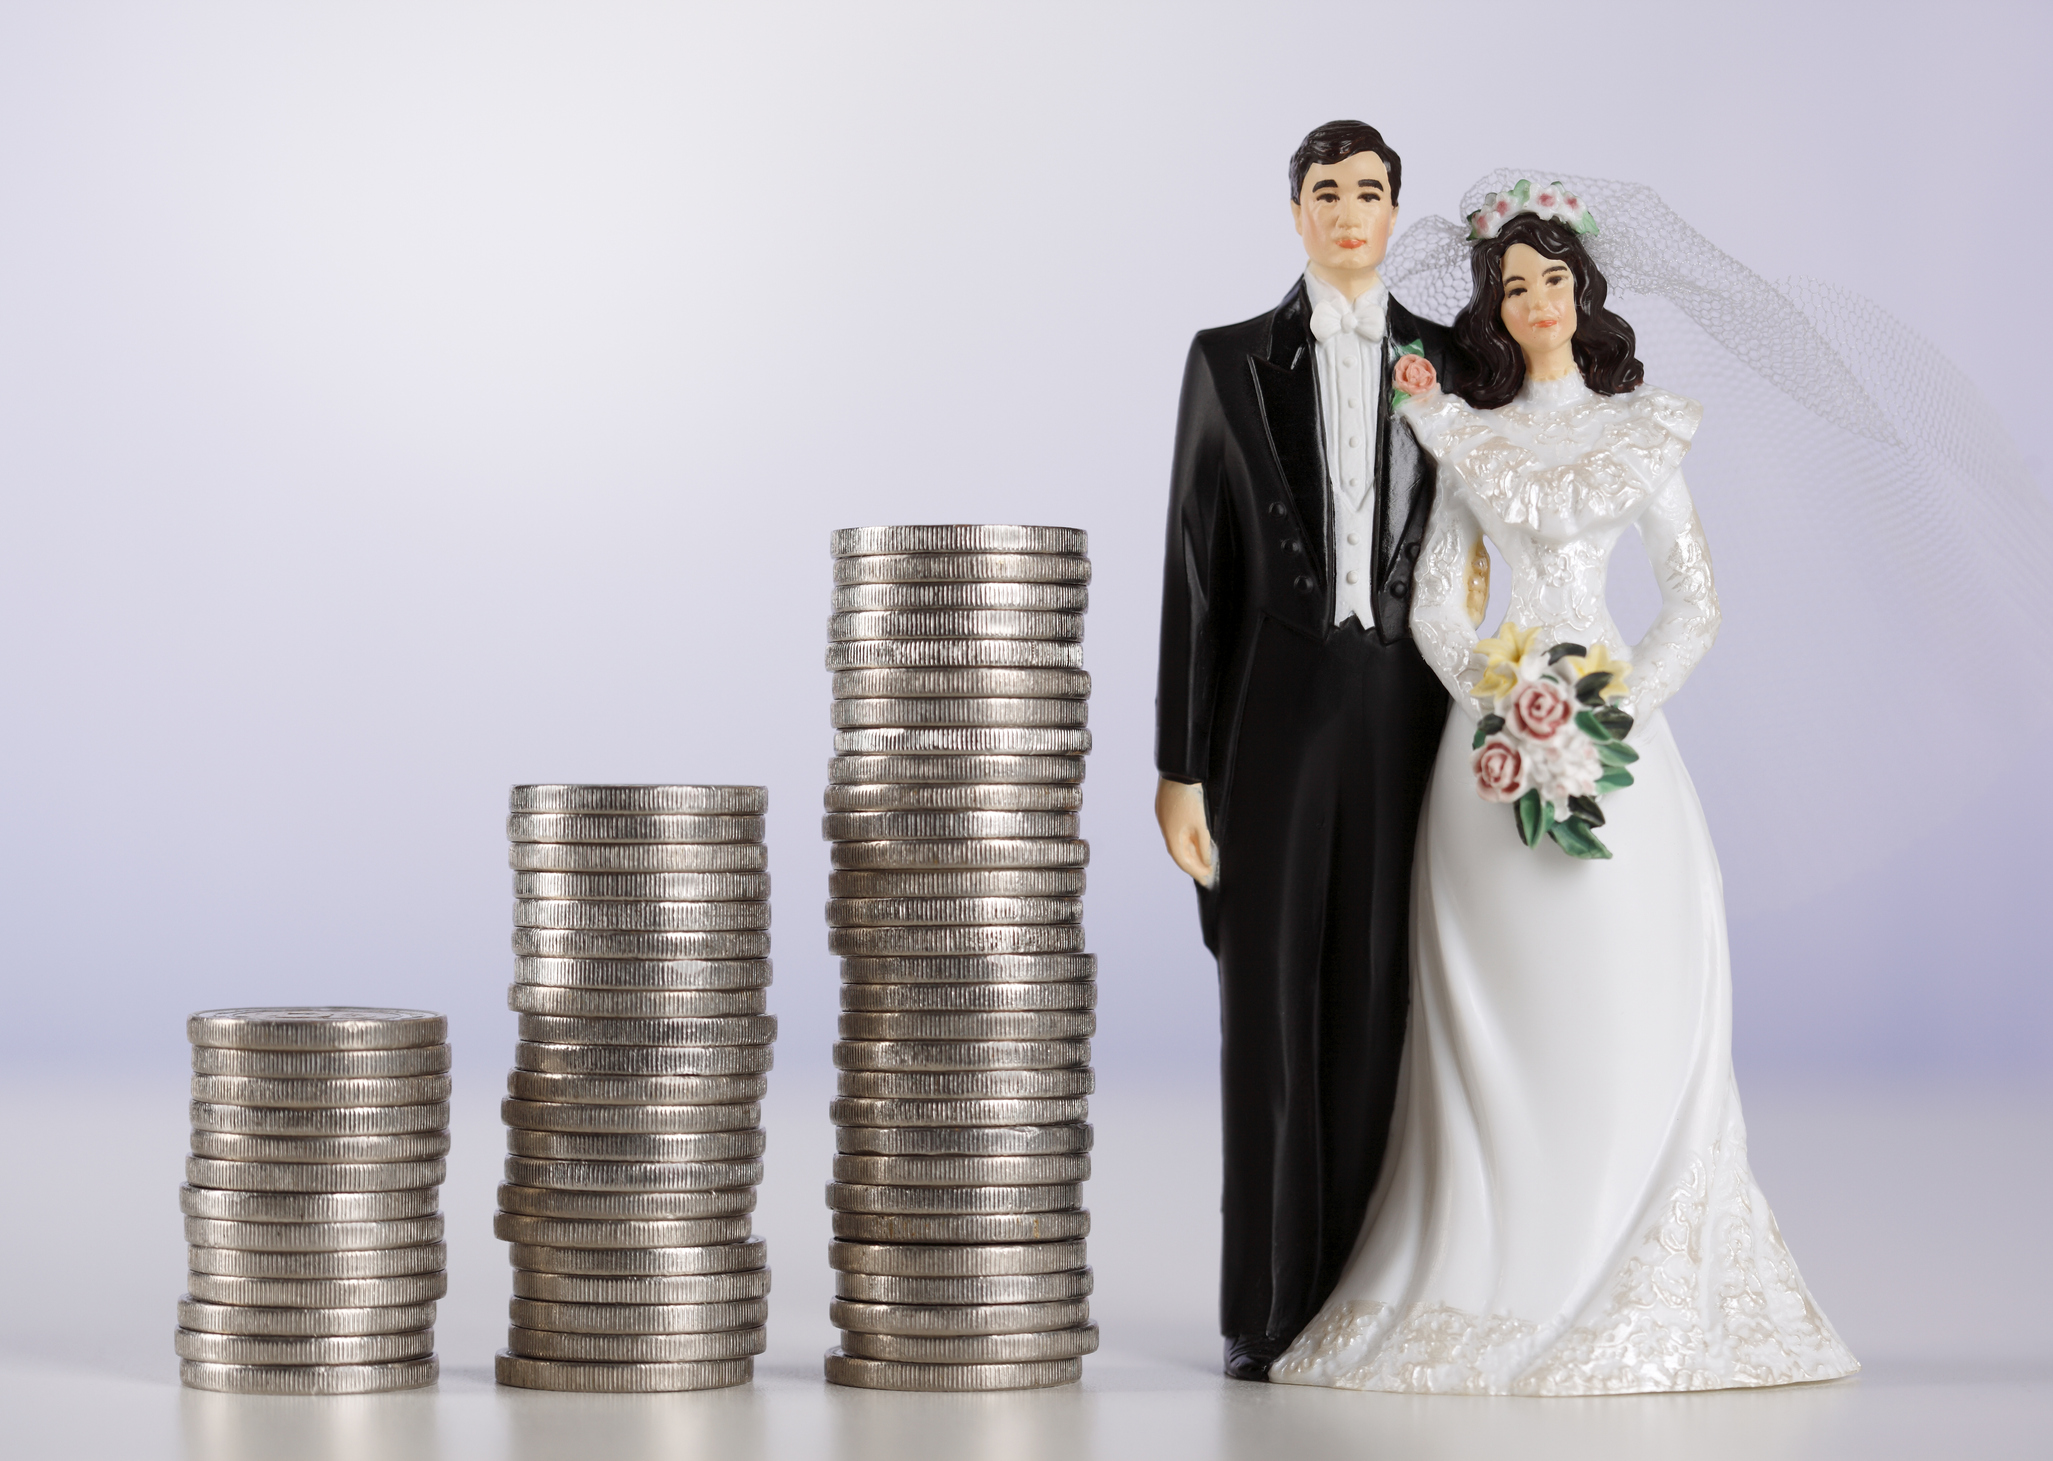 Wedding costs